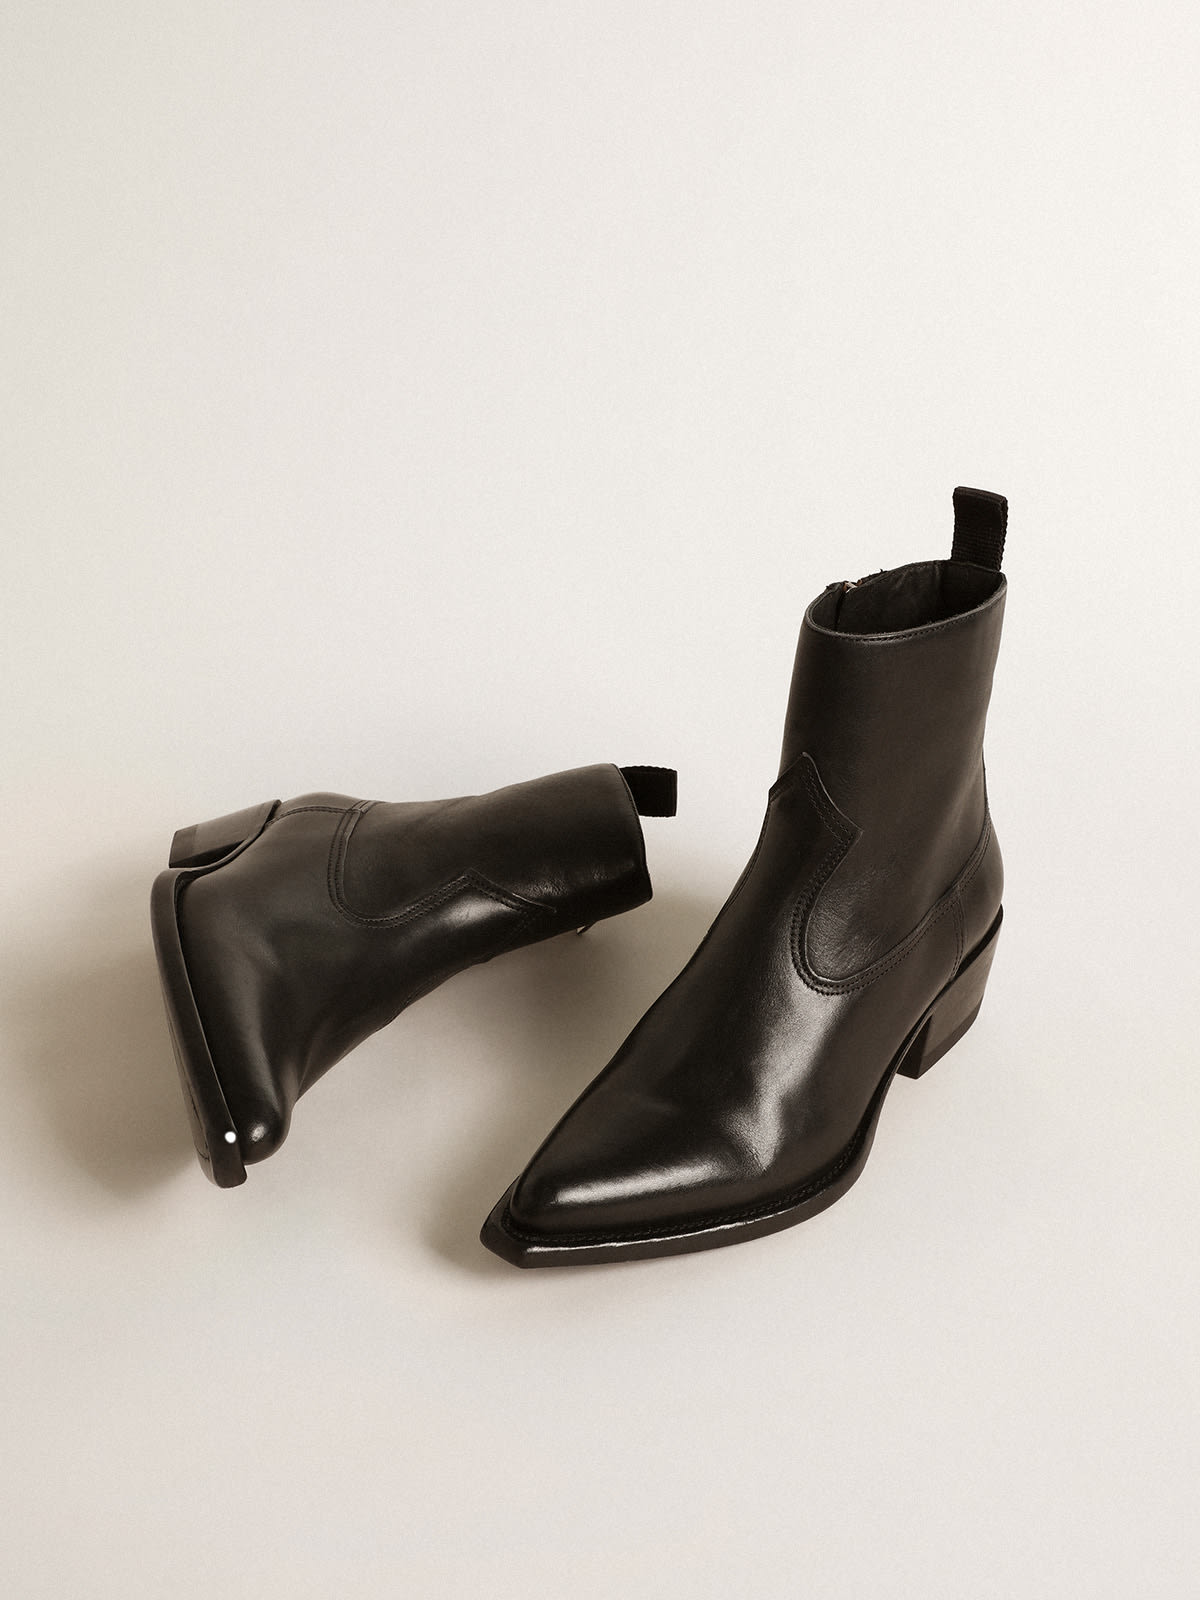 Golden Goose - Women’s Debbie boots in black leather in 